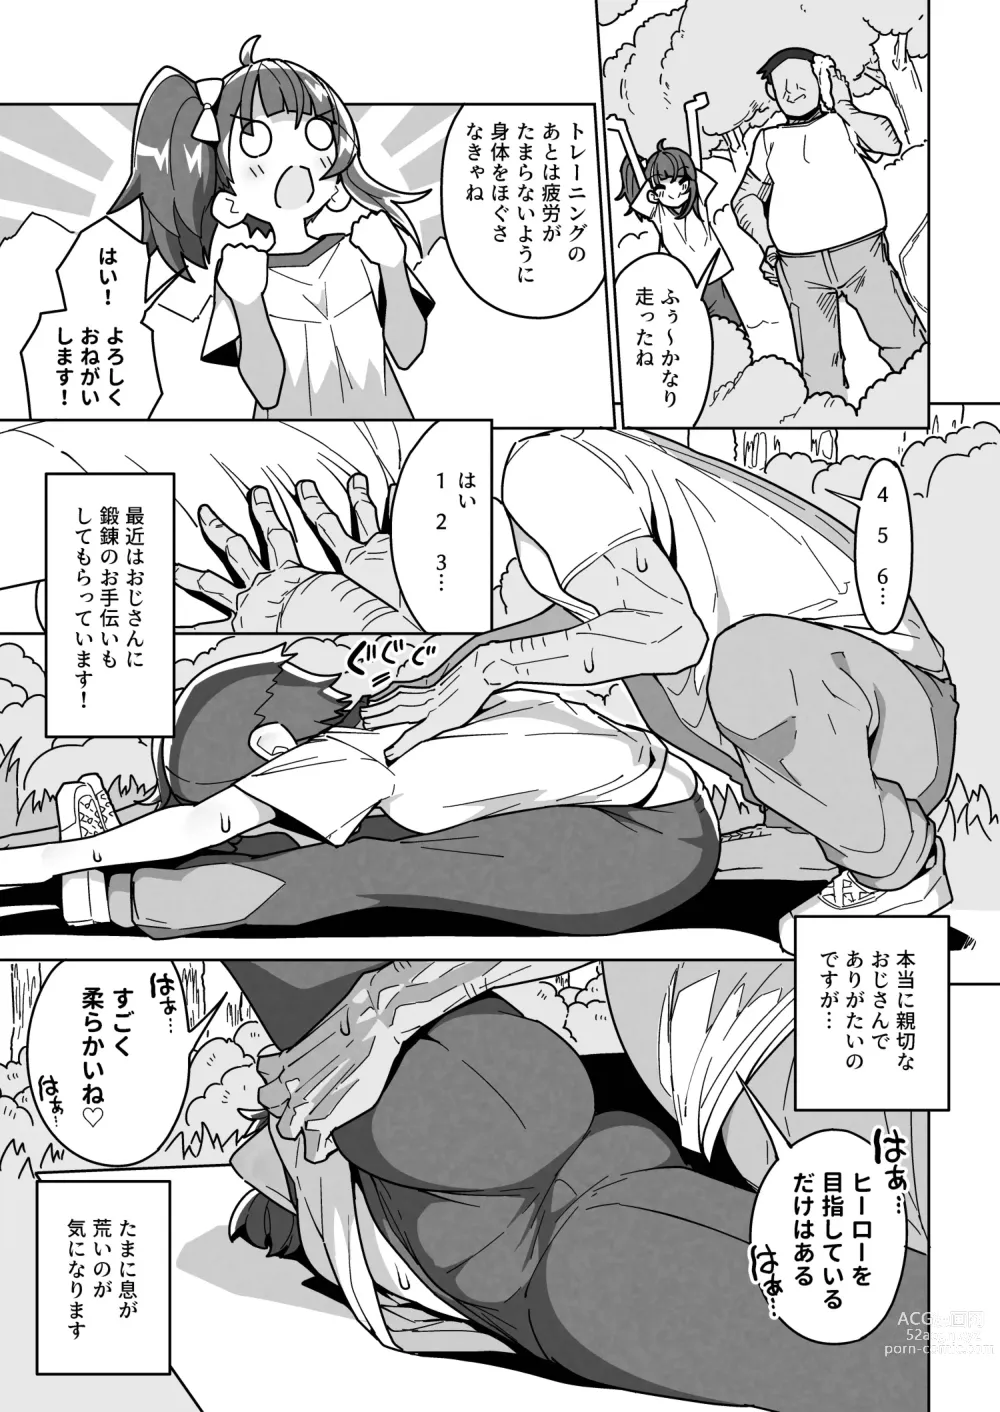 Page 5 of doujinshi Sora Damasare-ru